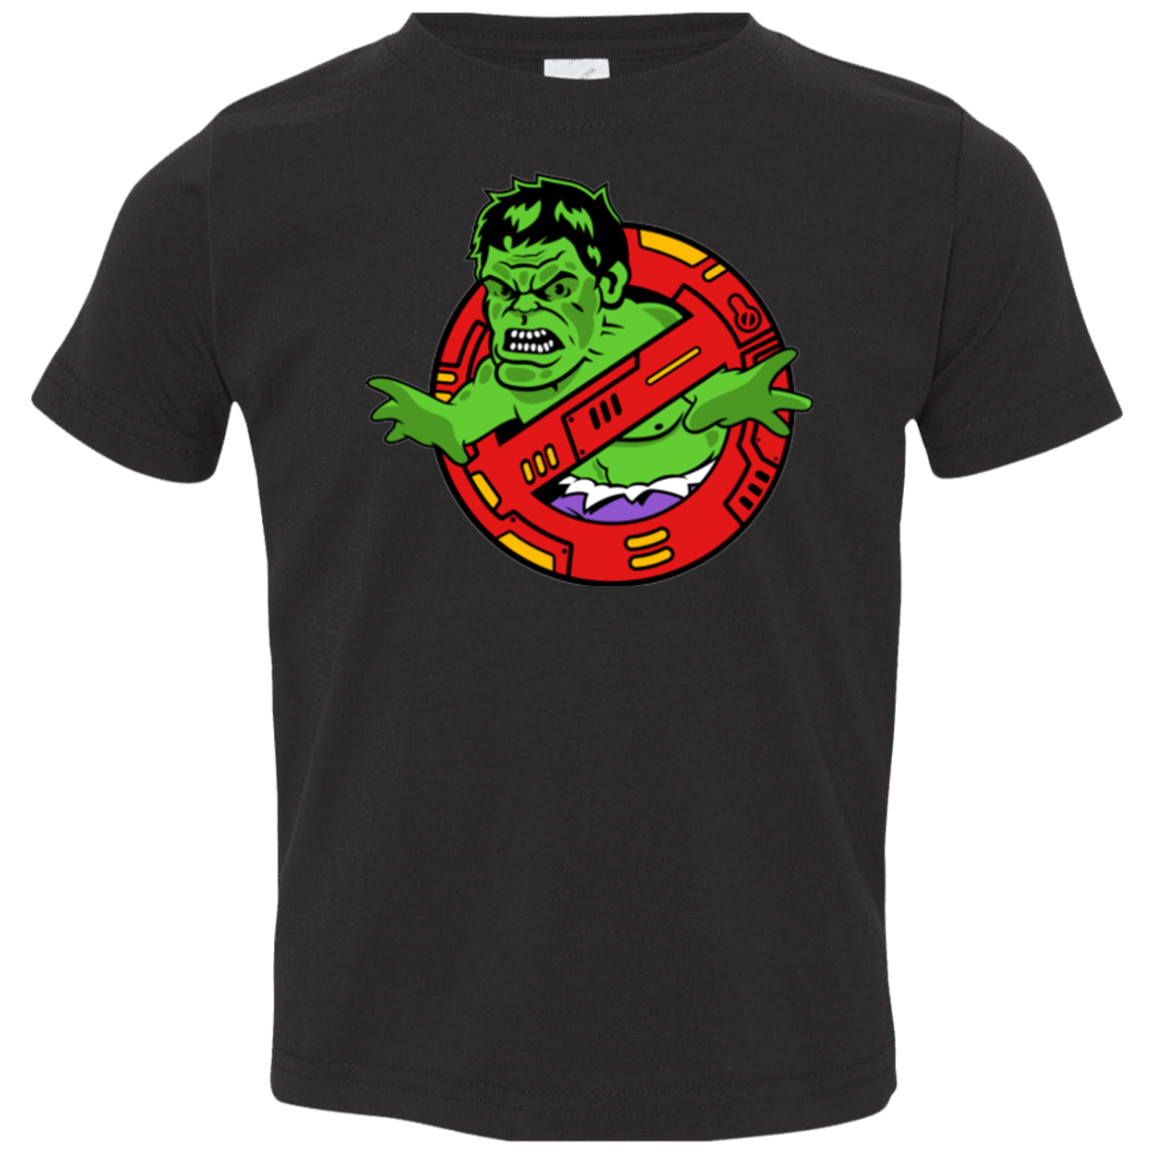 T-Shirts Black / 2T Hulk Busters Toddler Premium T-Shirt